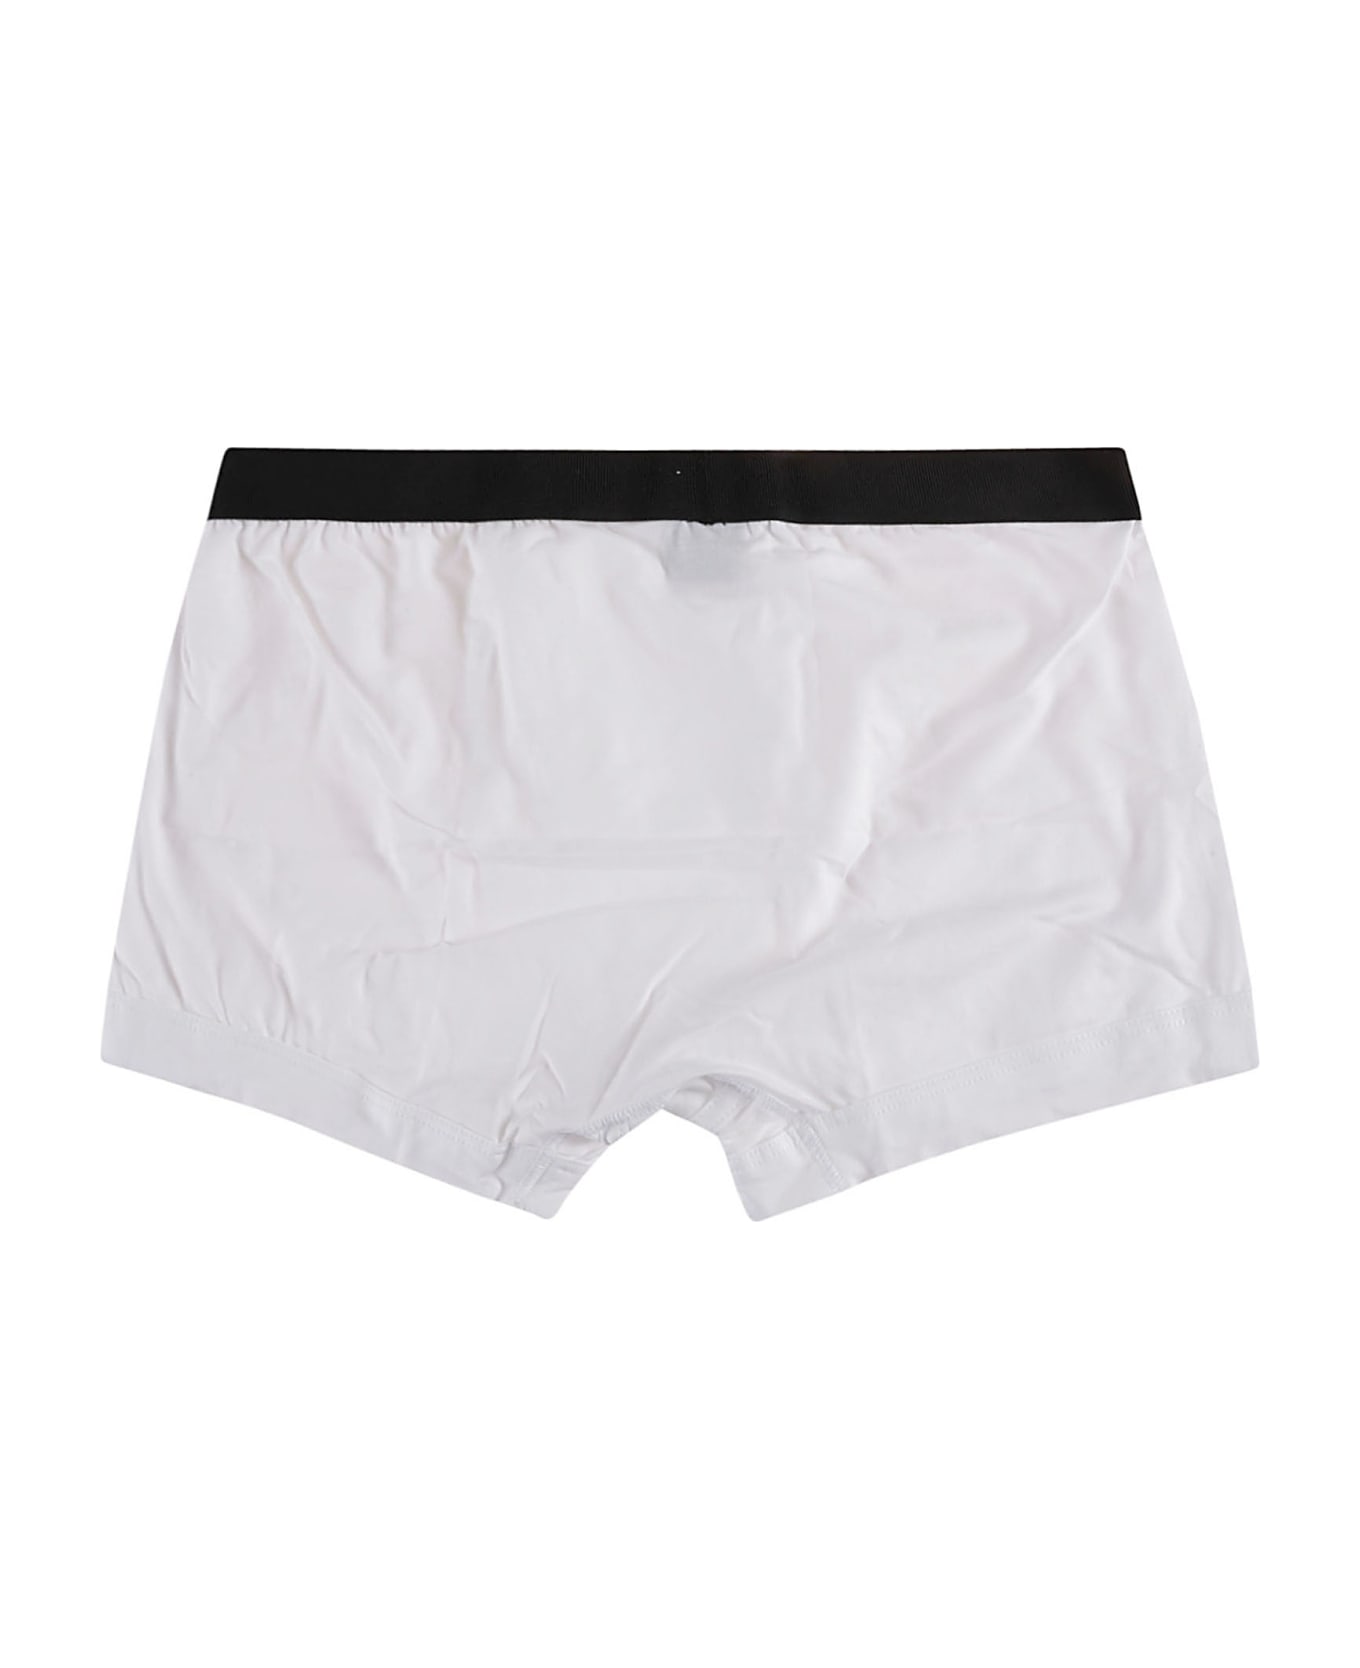 Tom Ford Elastic Logo Waist Boxer Shorts - White